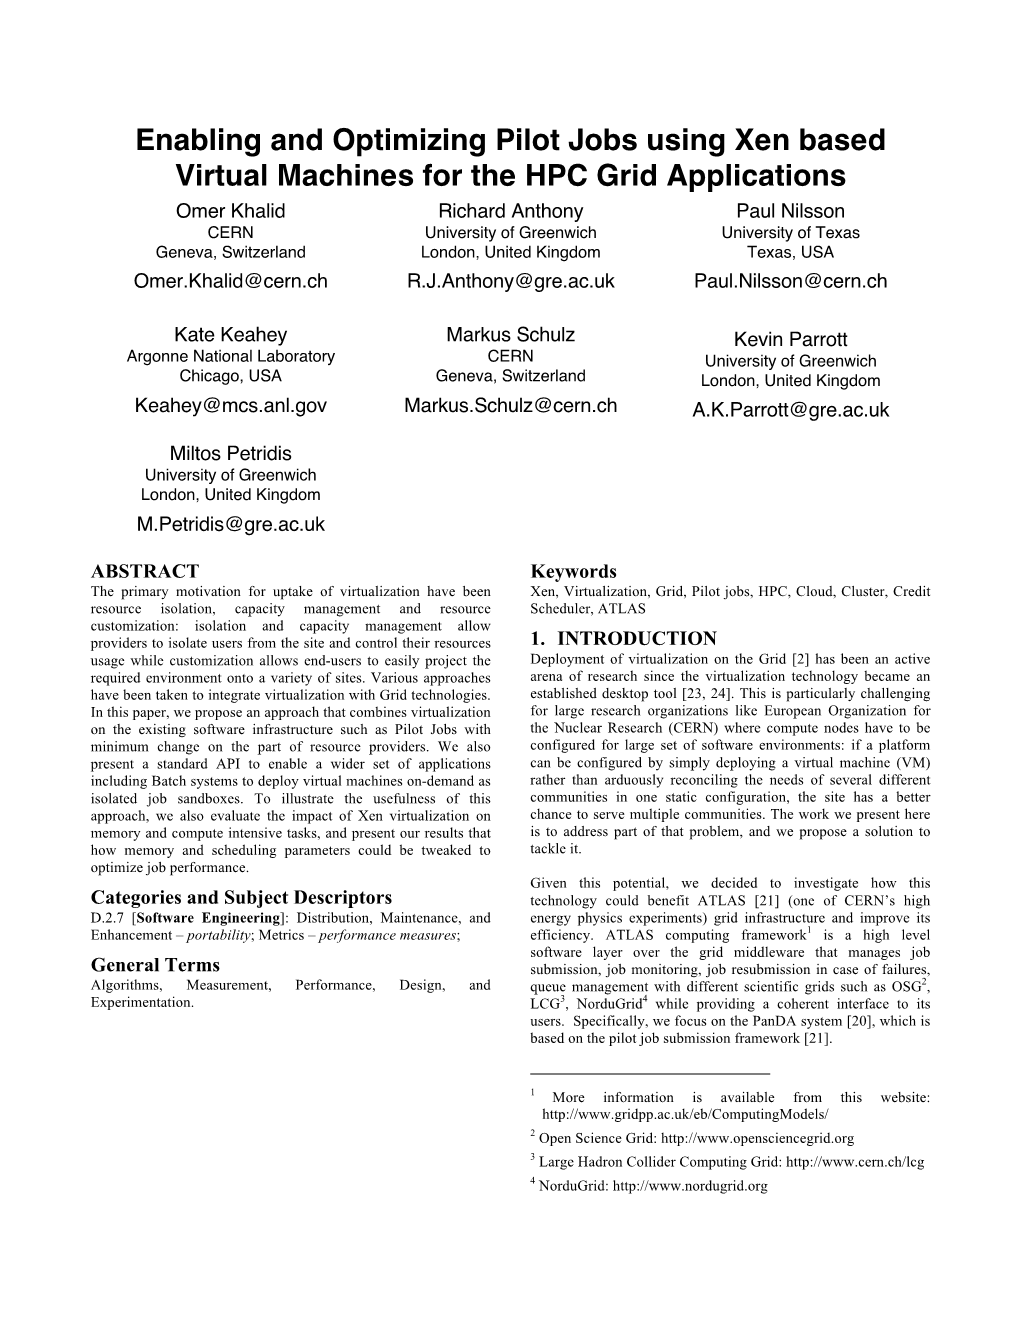 Enabling and Optimizing Pilot Jobs Using Xen Based Virtual Machines